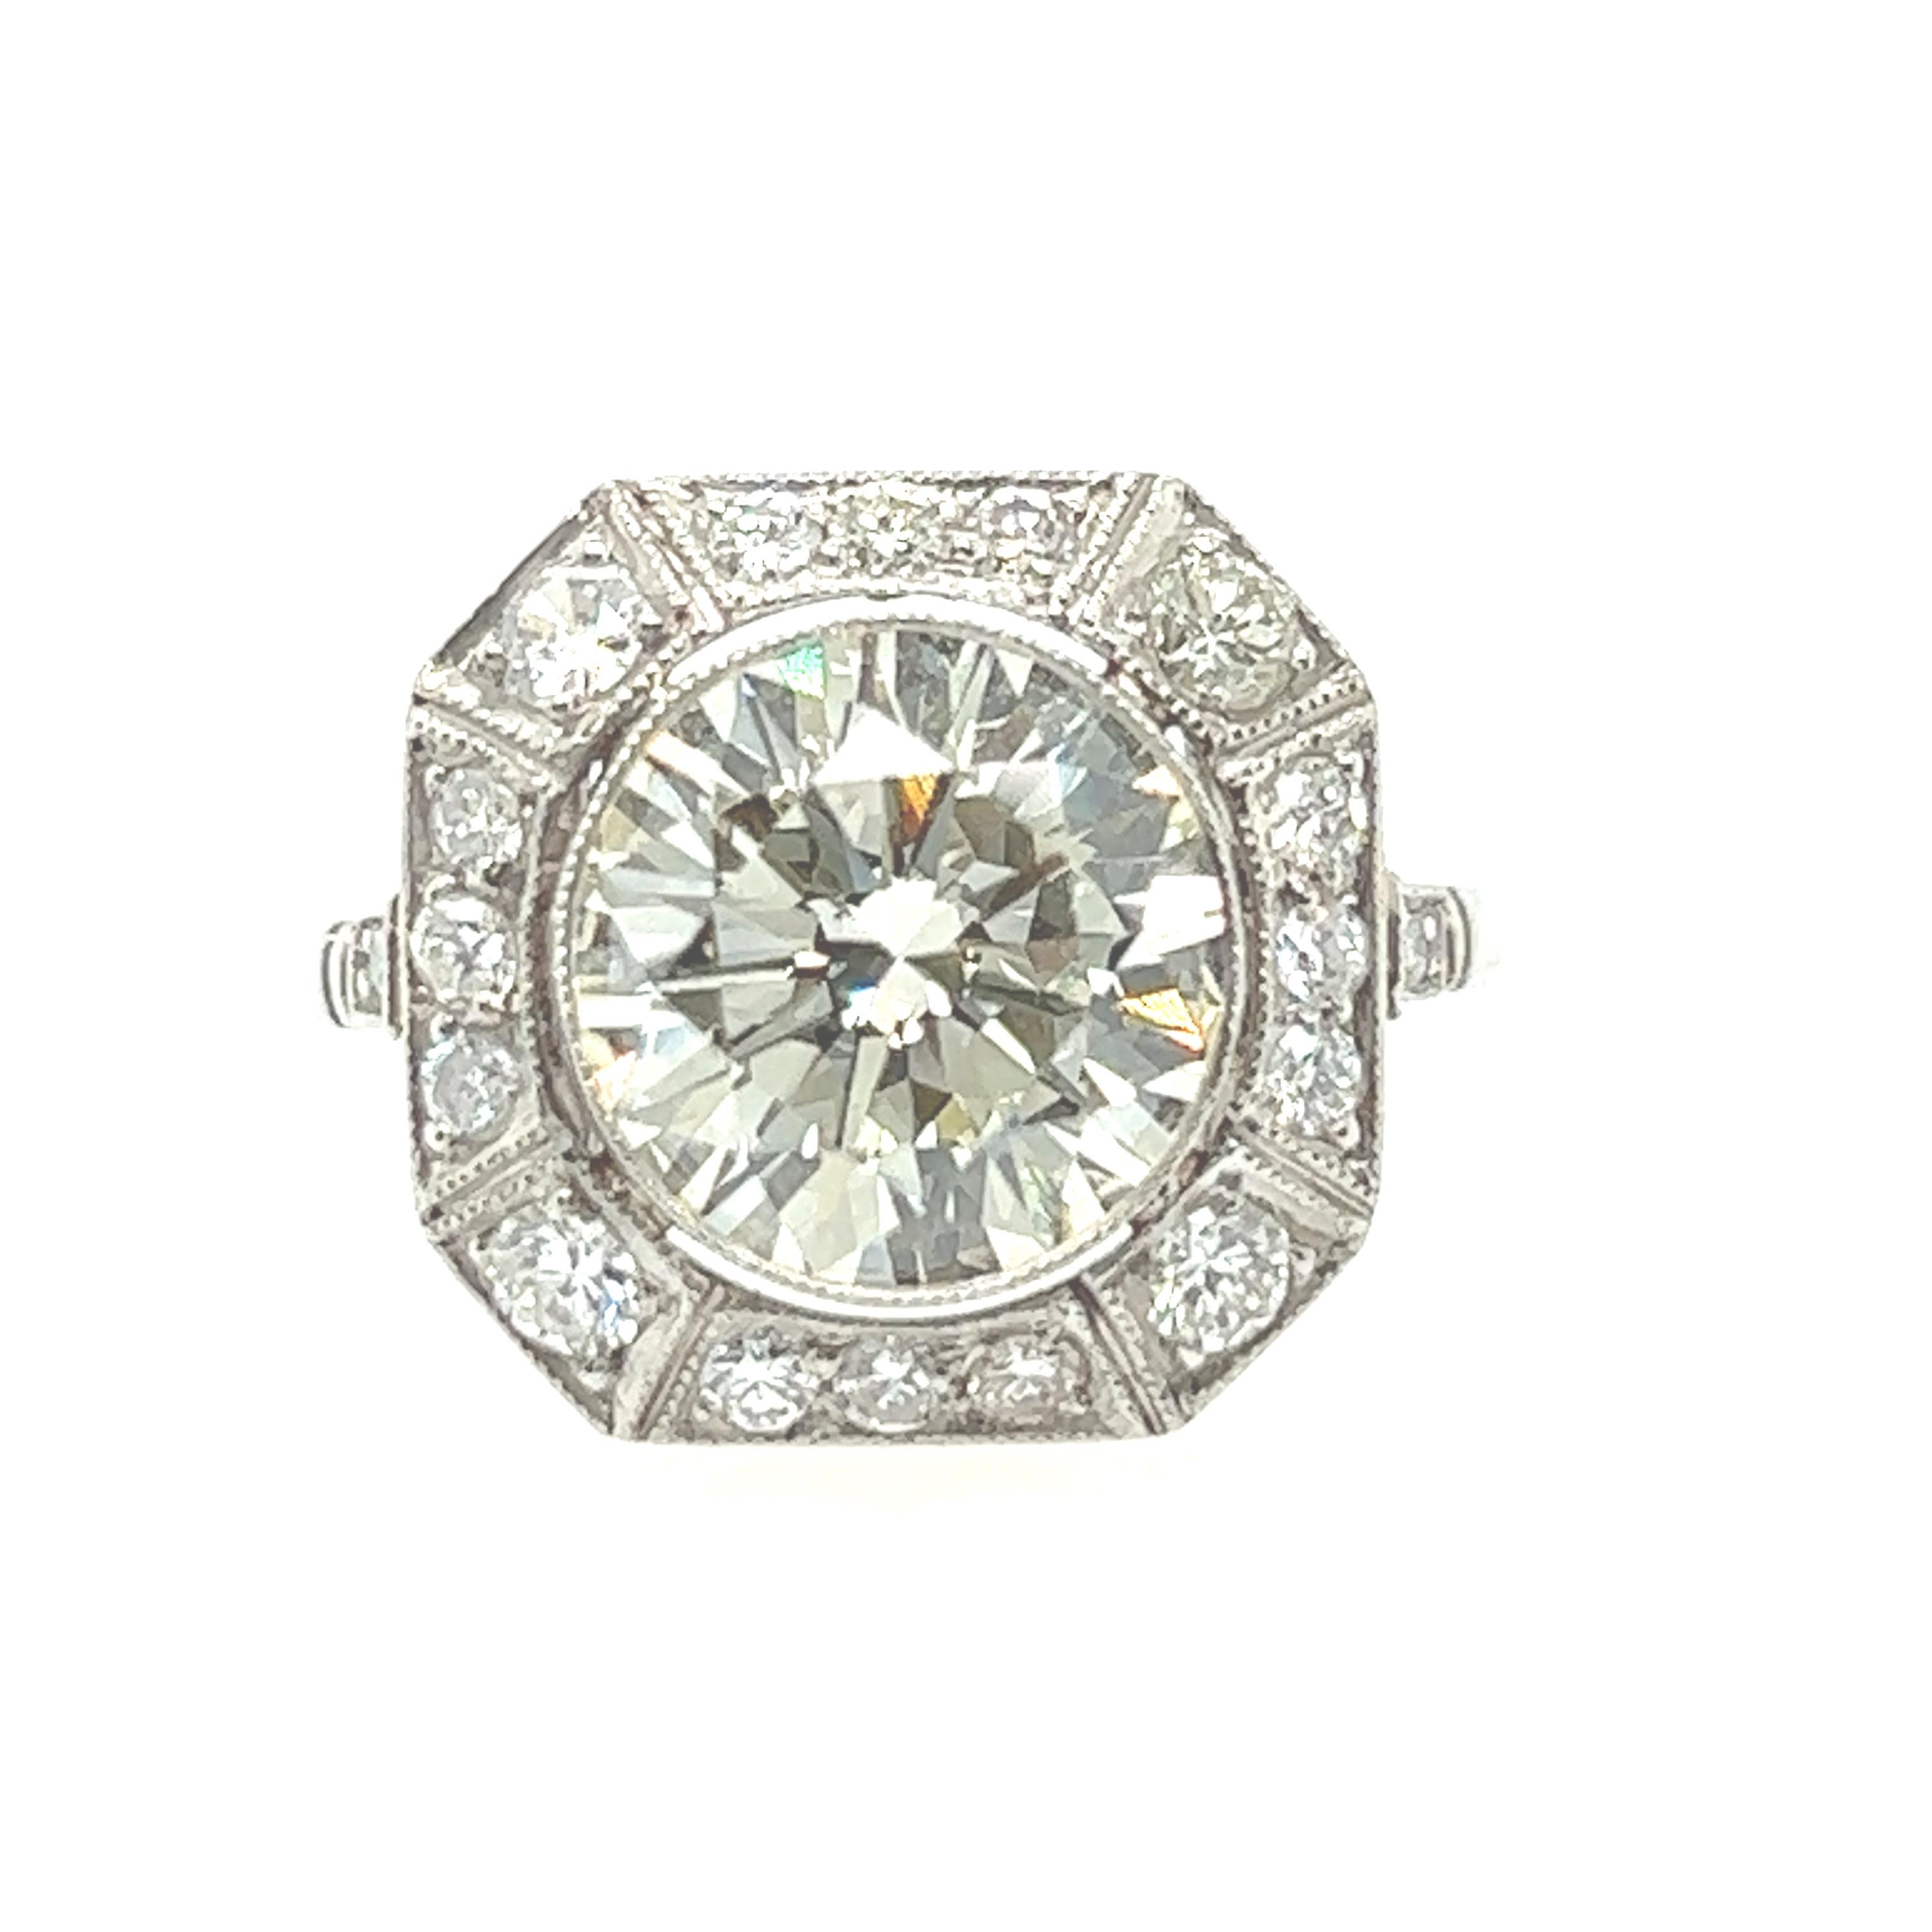 Women's or Men's 3.22 Carat Diamond Art Deco Style Ring